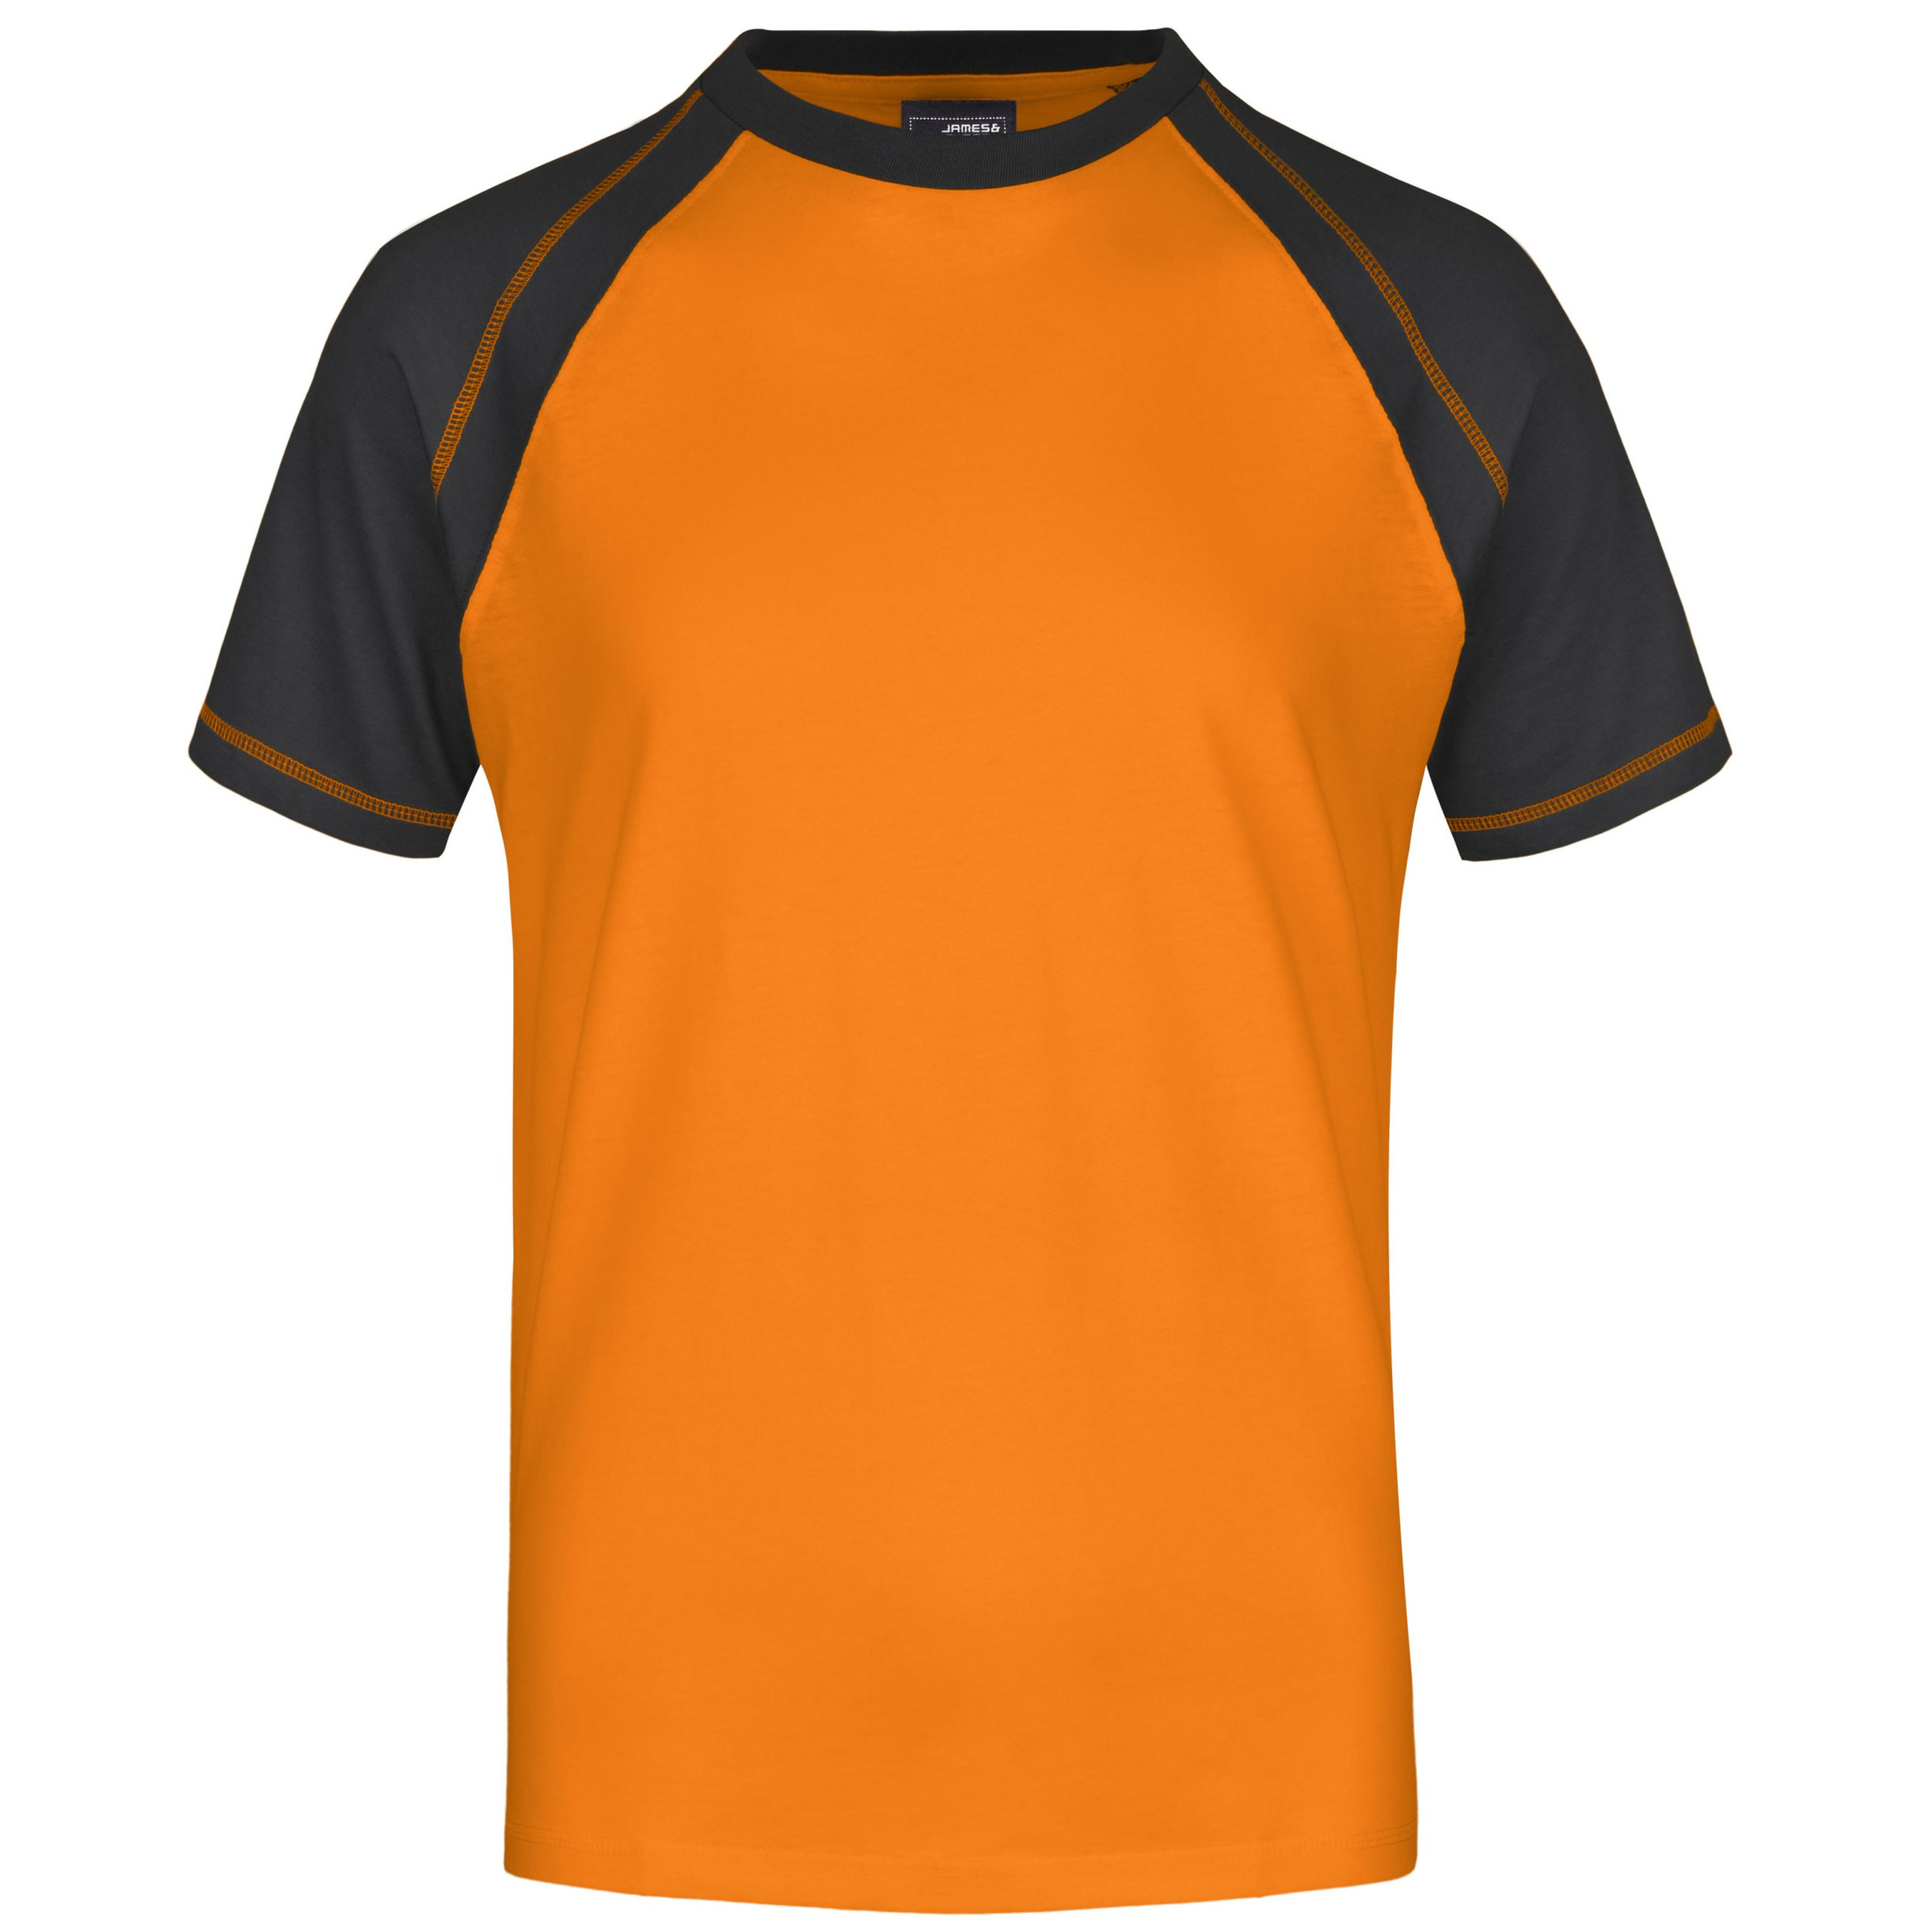 Heren t-shirts oranje/zwart